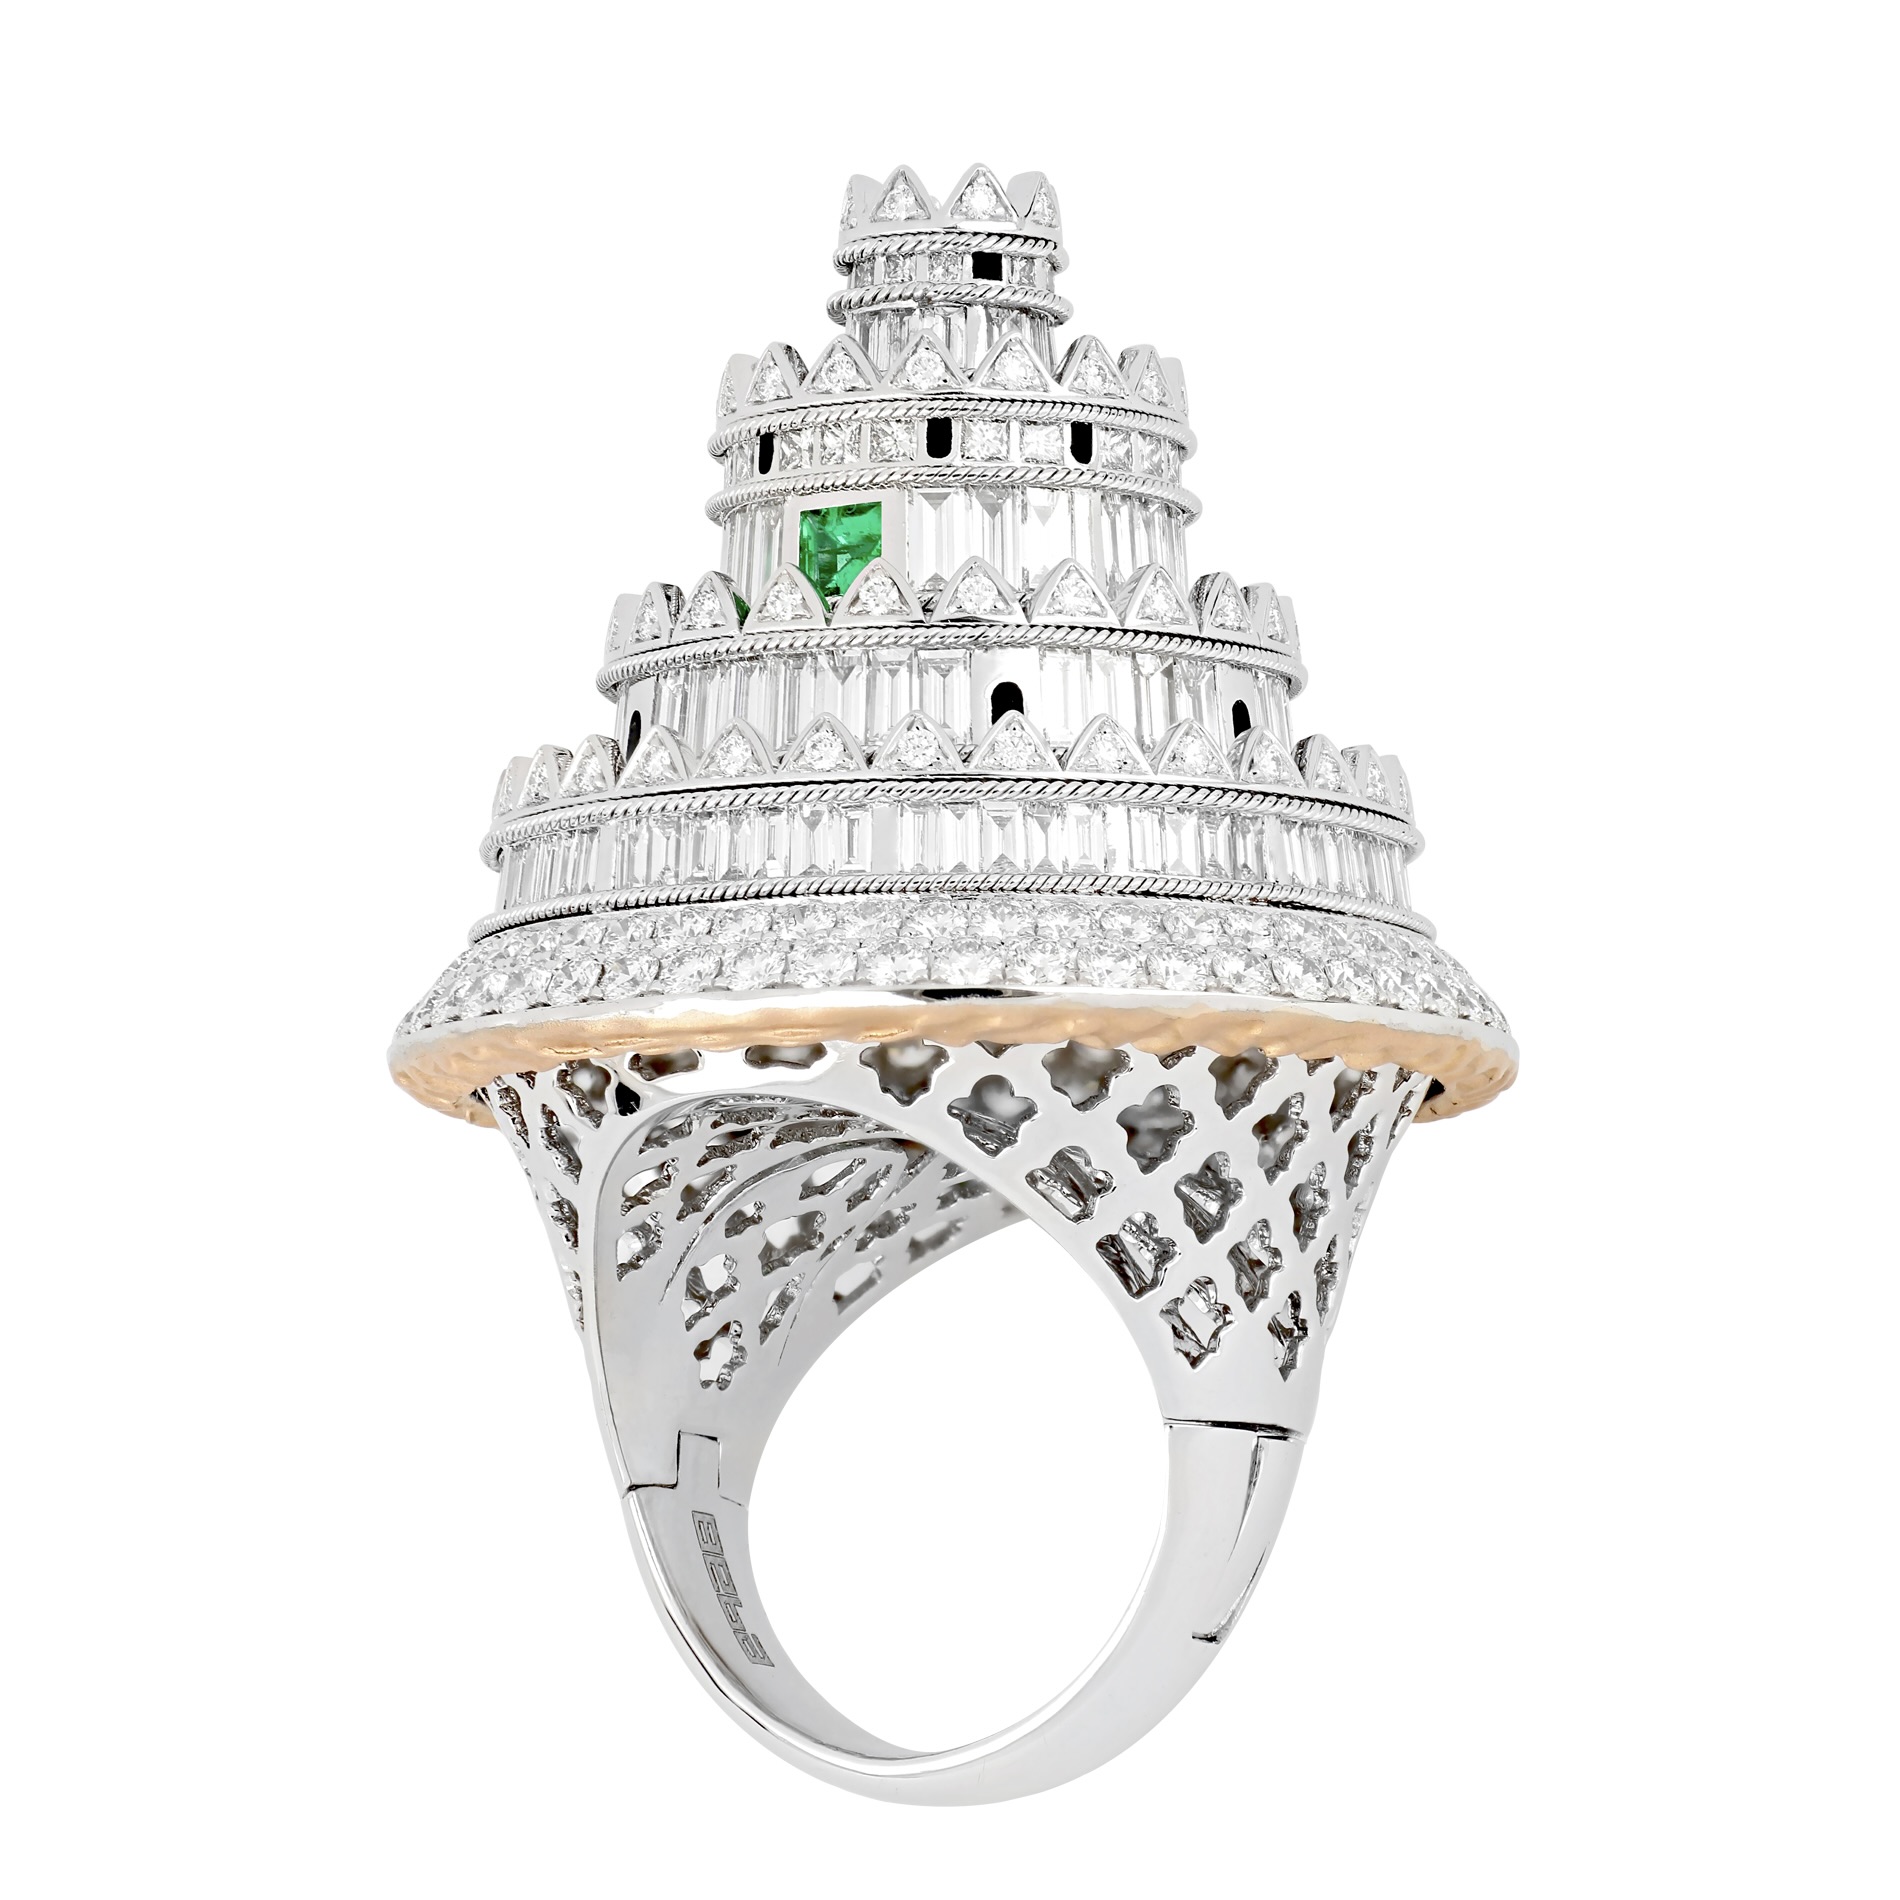 Tariq Riaz Craftsmanship - Ring with custom-cut natural diamonds 